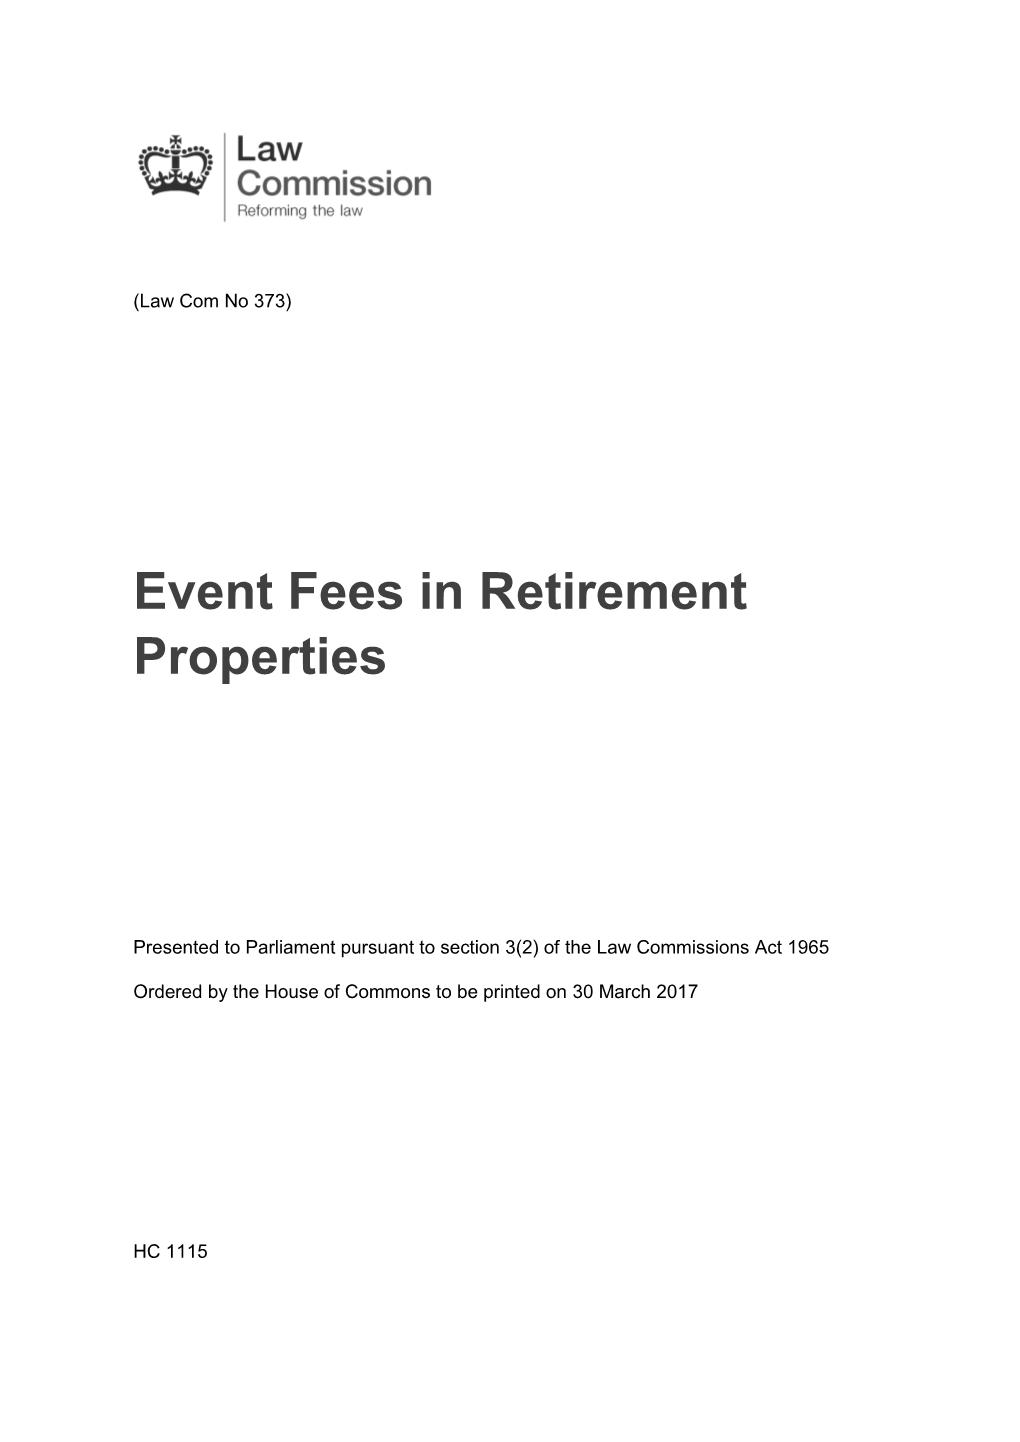 Event Fees in Retirement Properties